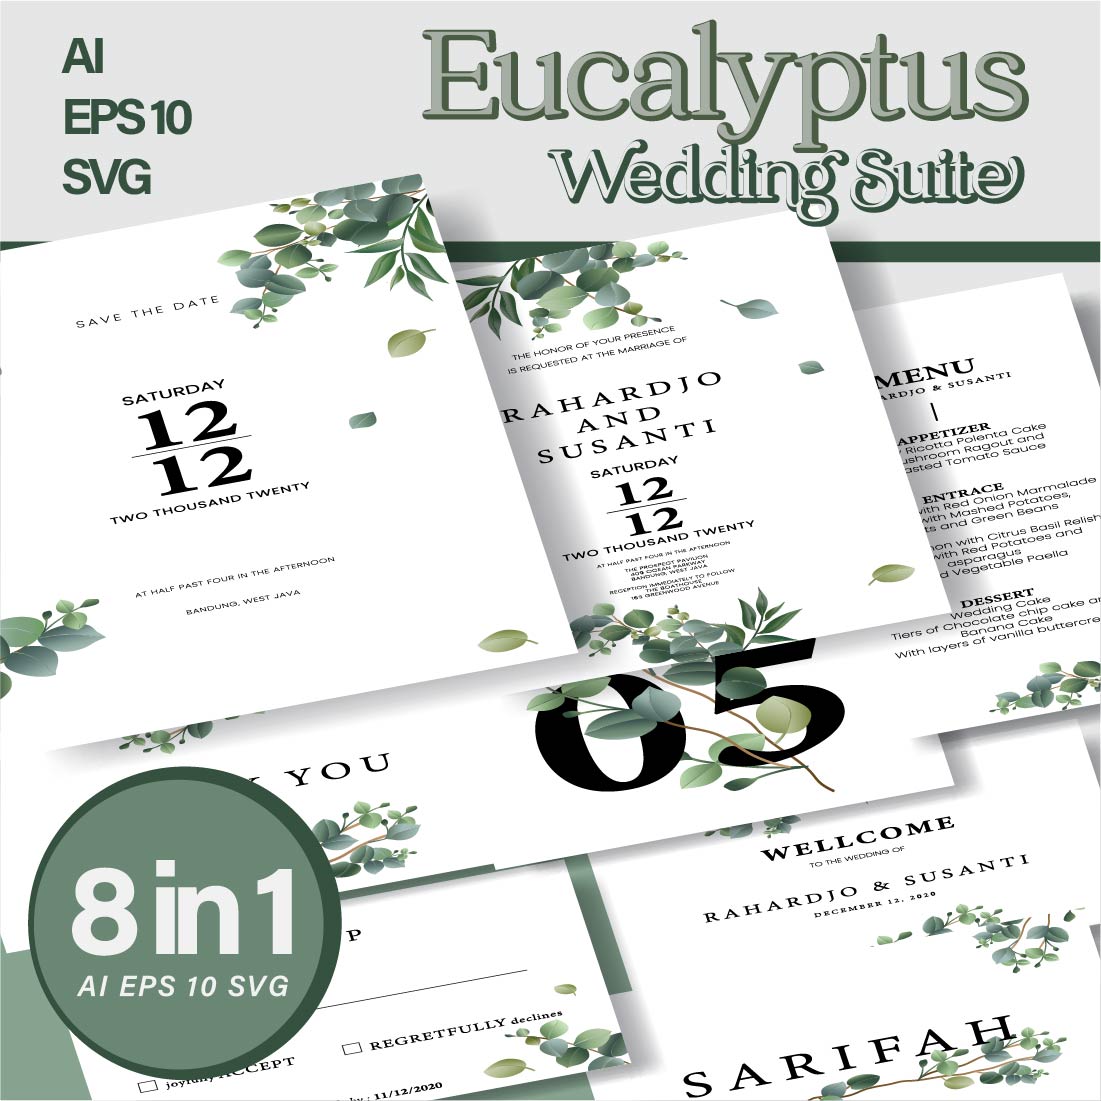 eucalyptus wedding suite cover image.